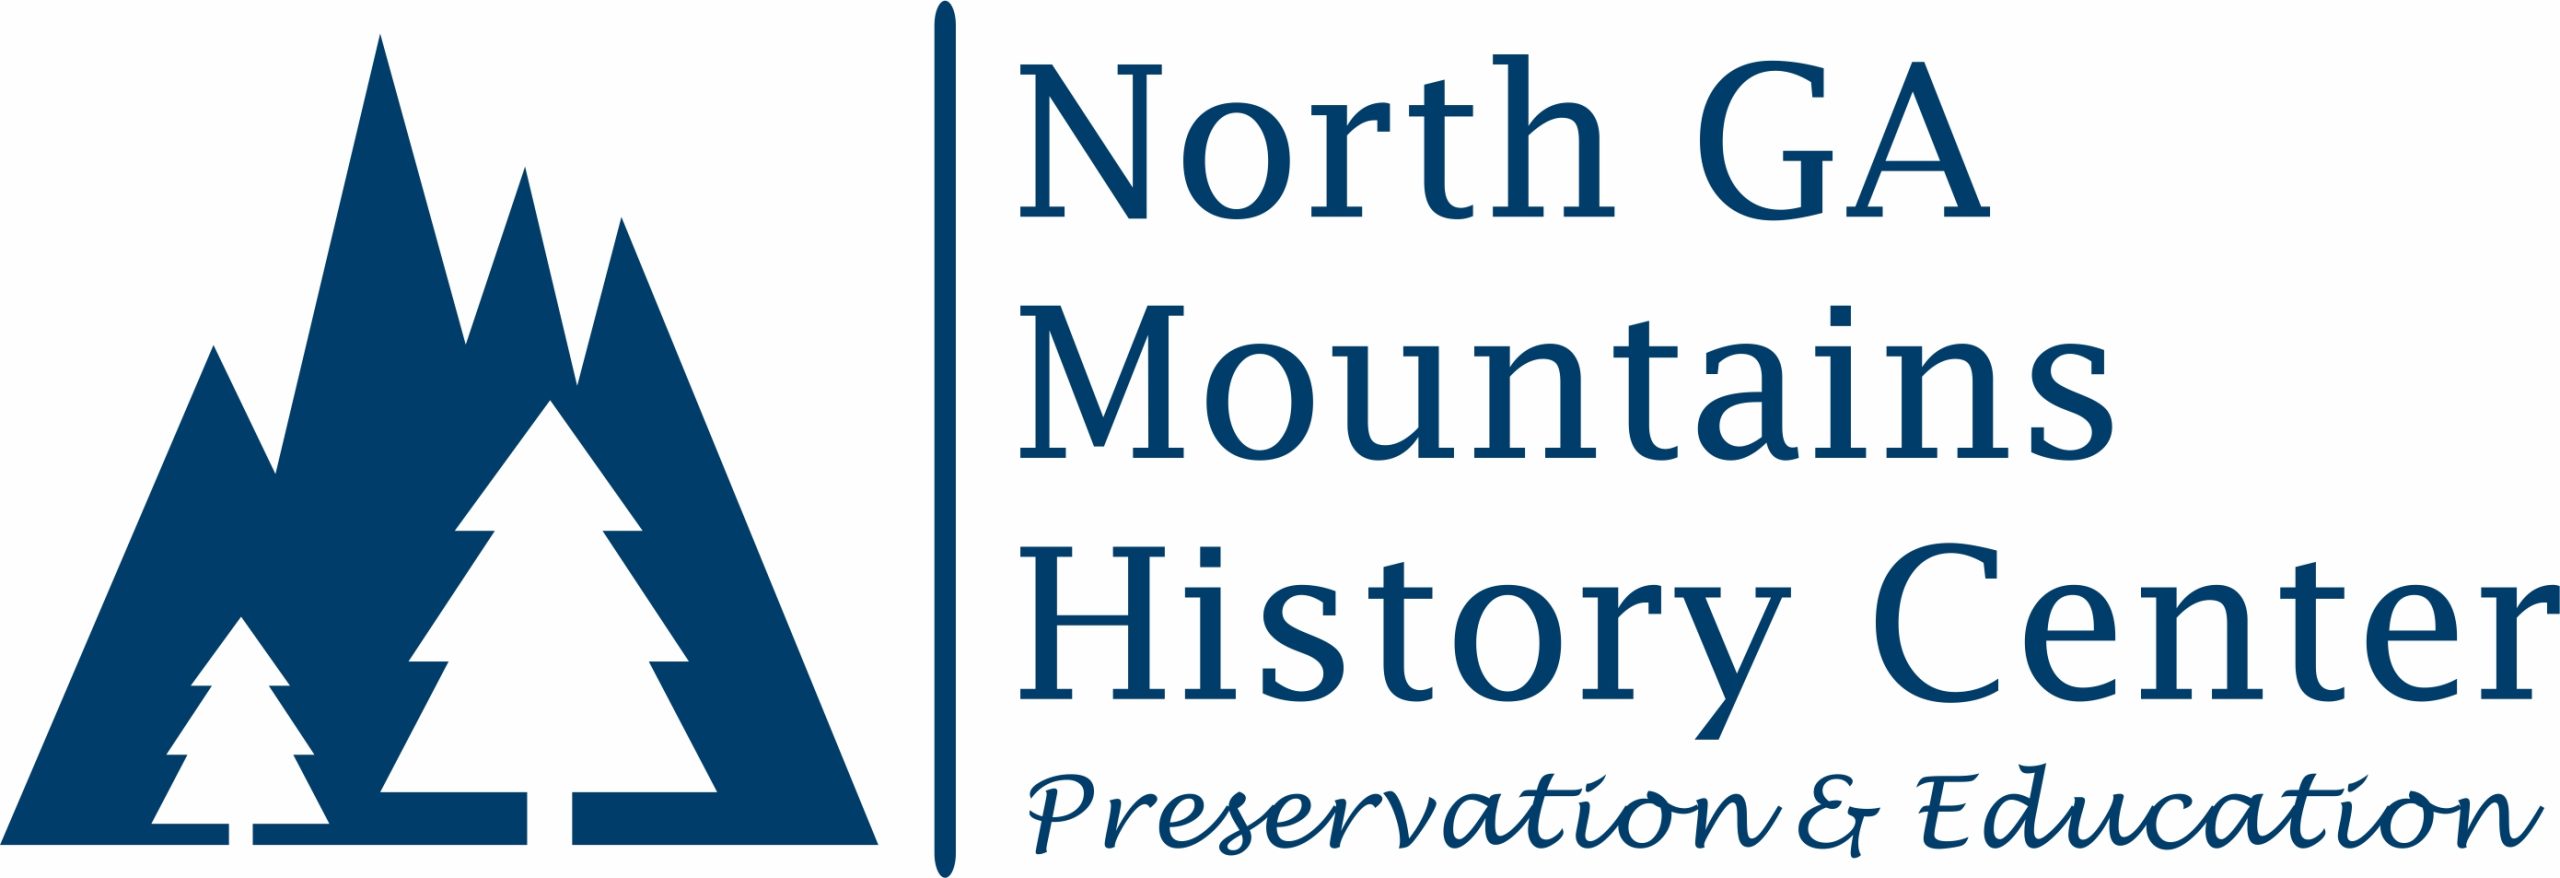 North GA Mountain History